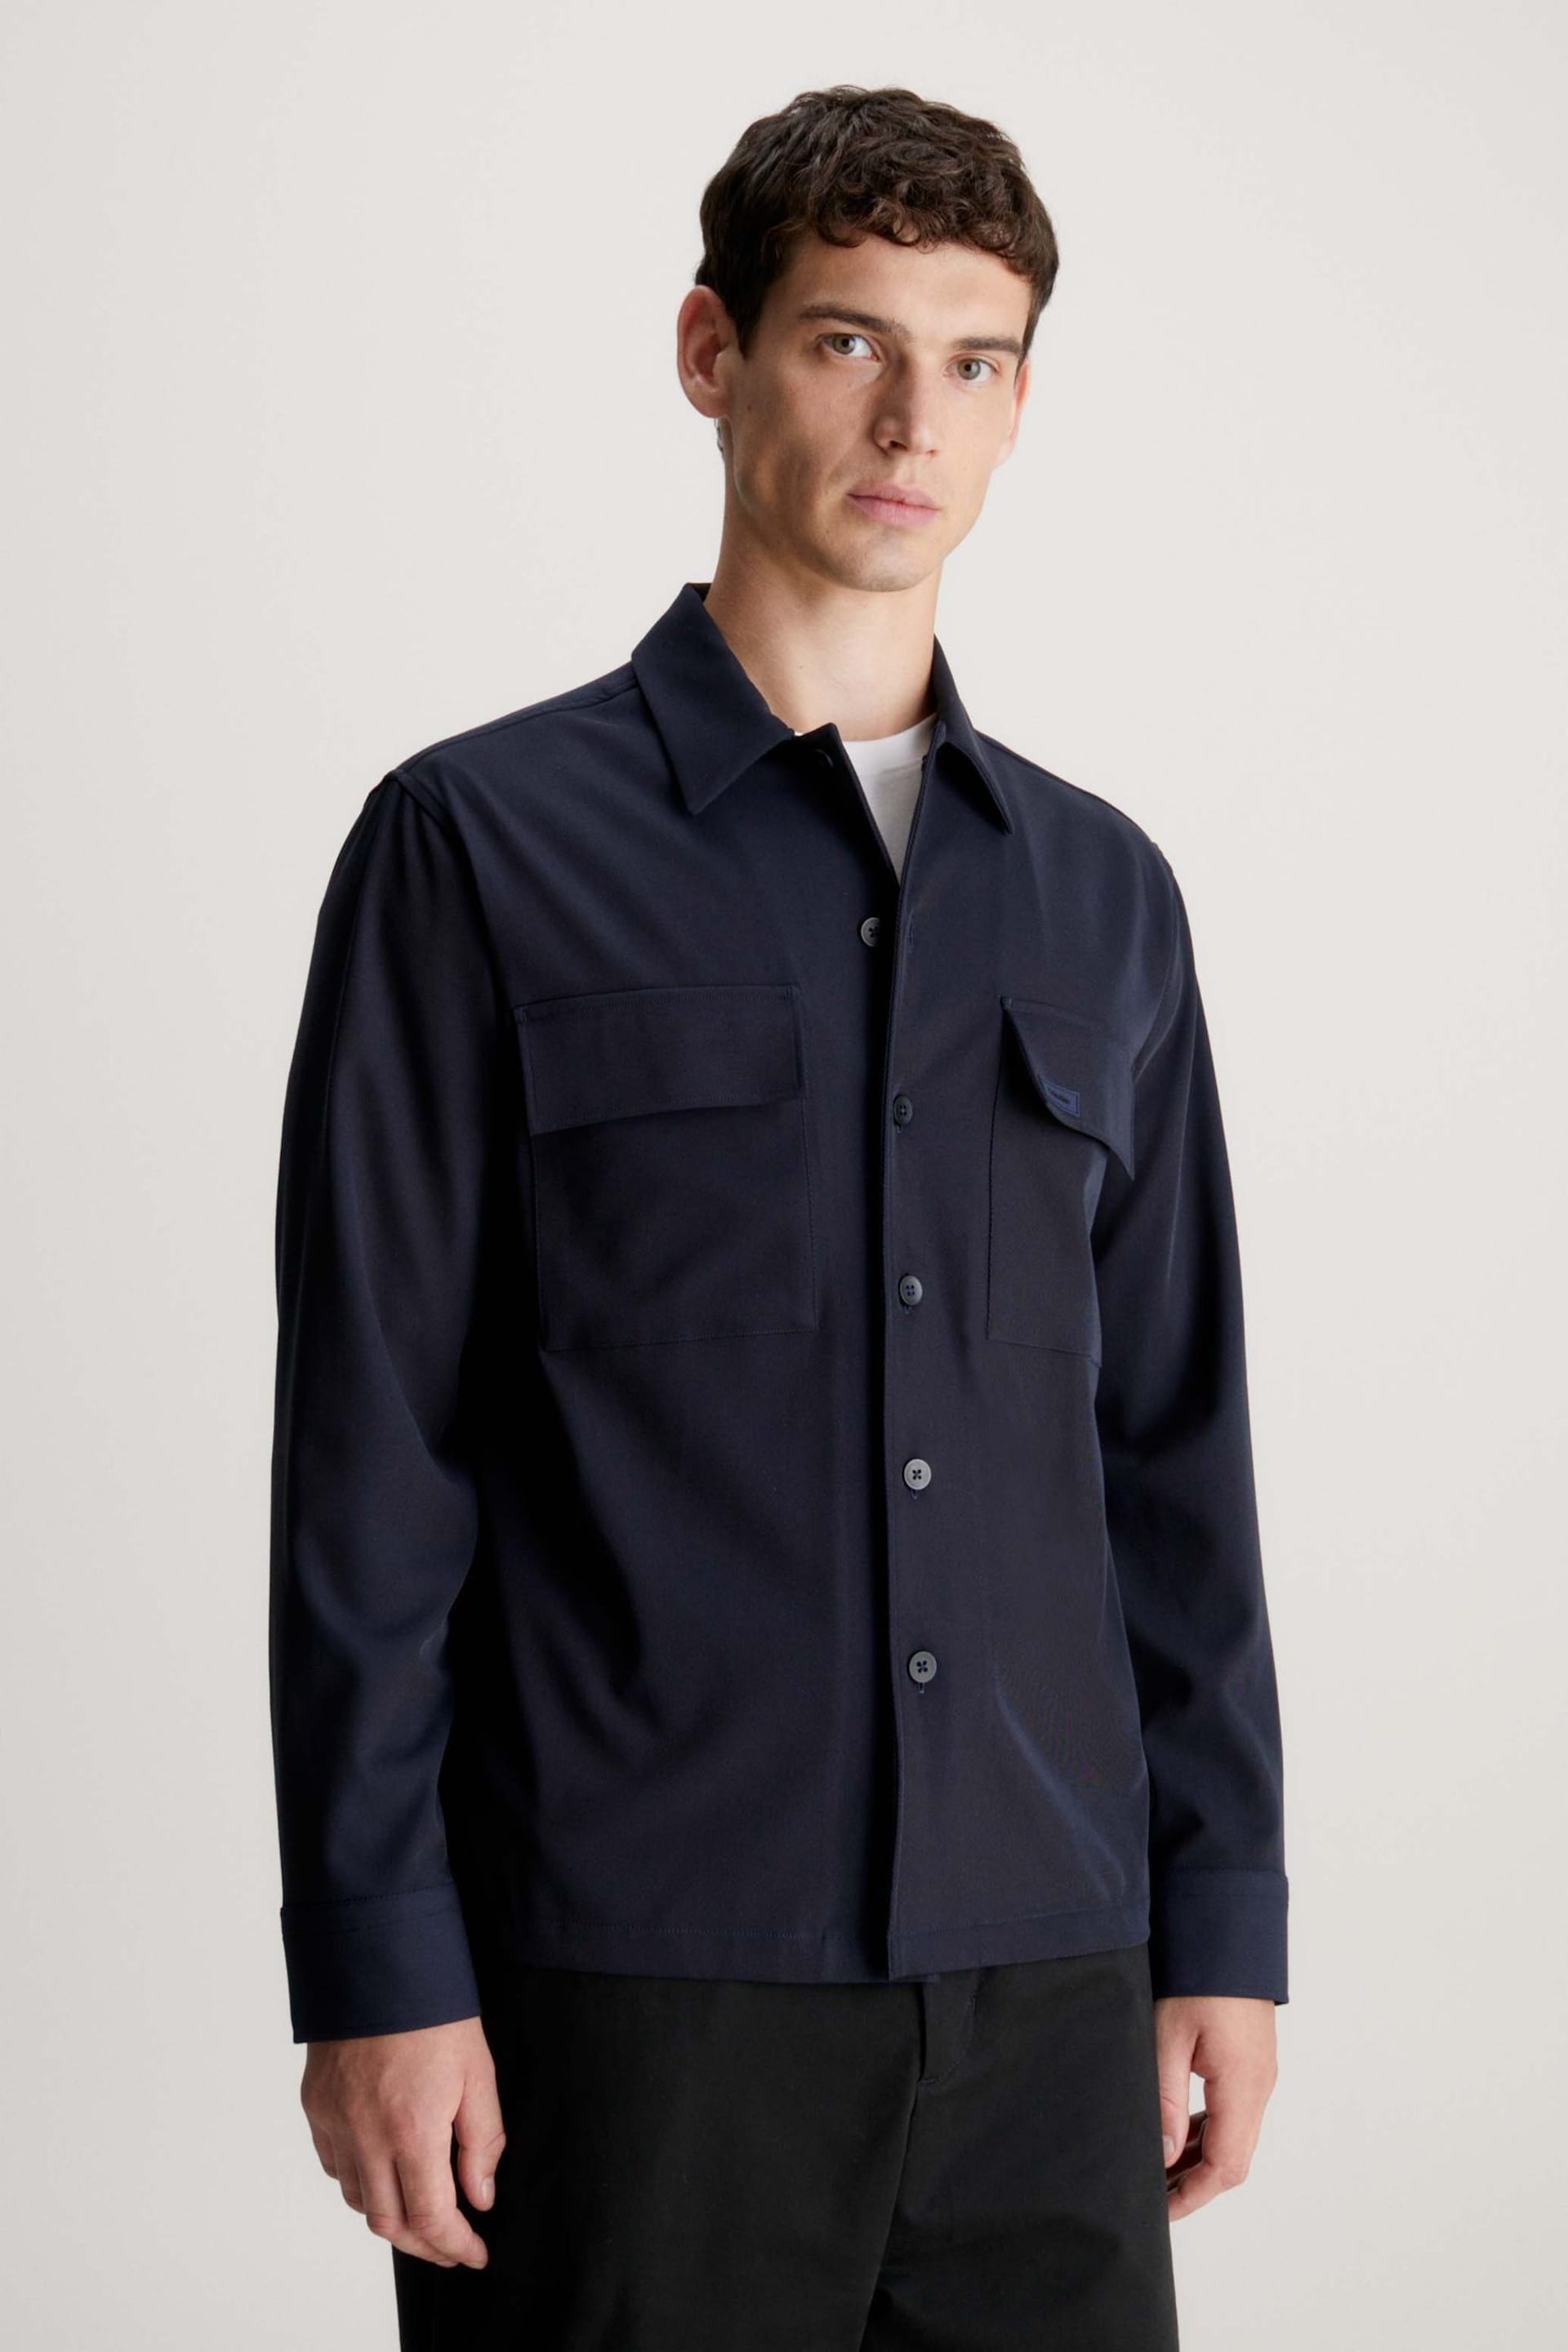 Calvin Klein Blue Soft Twill Overshirt - Image 1 of 3